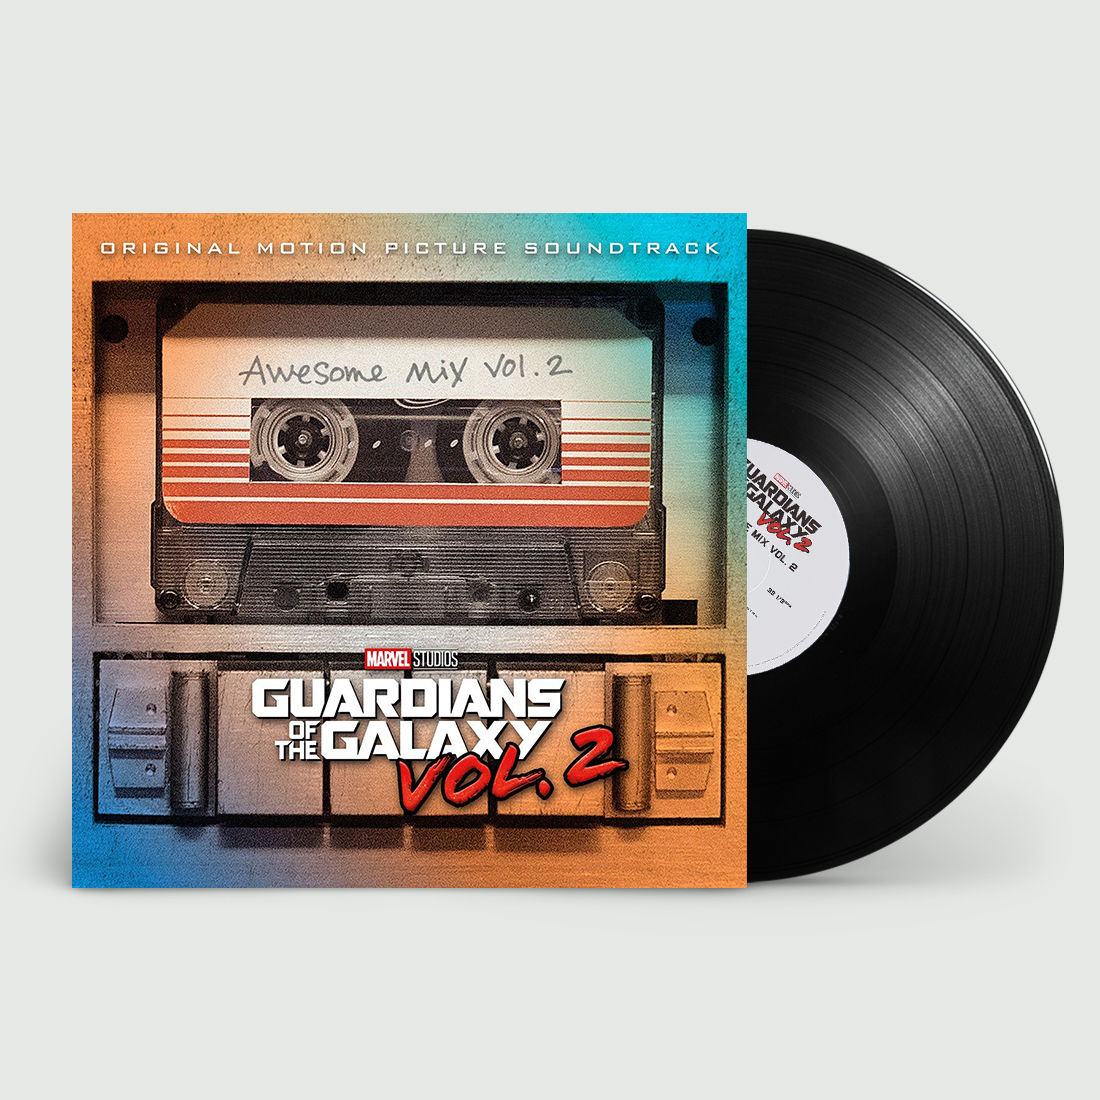 Guardians Of The Galaxy: Triple Album Bundle (Awesome Mix Vol. 1, 2 + 3)